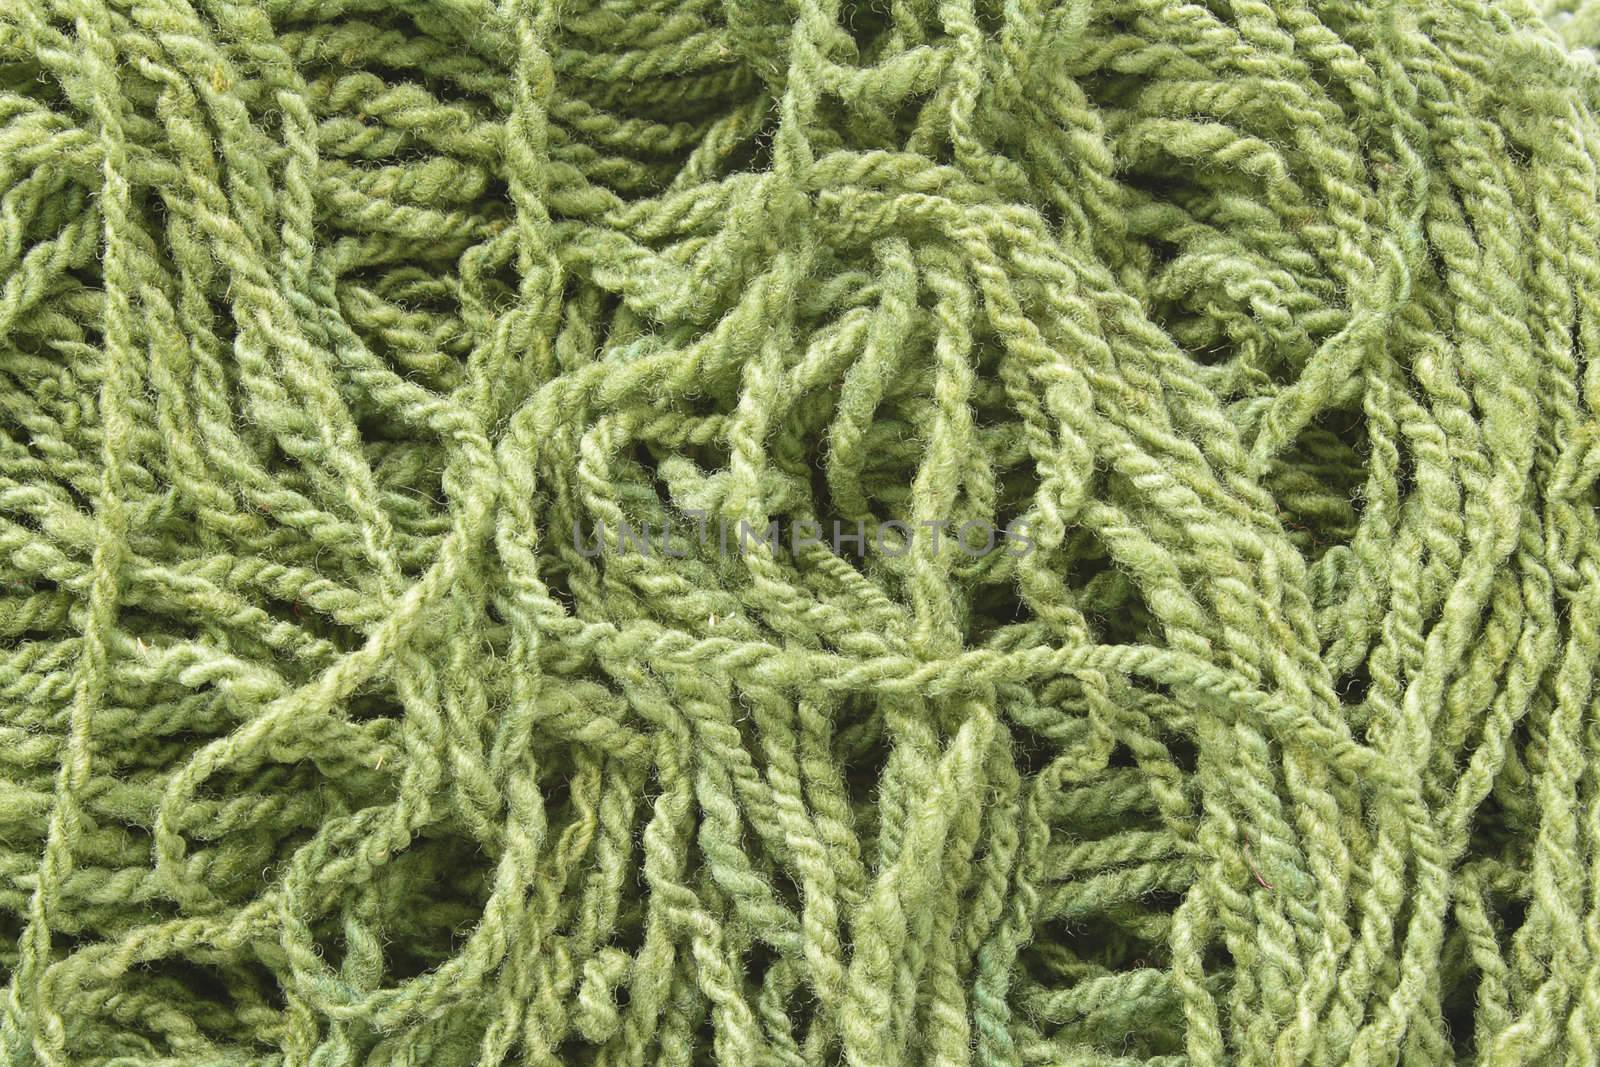 Background with green woolen yarn